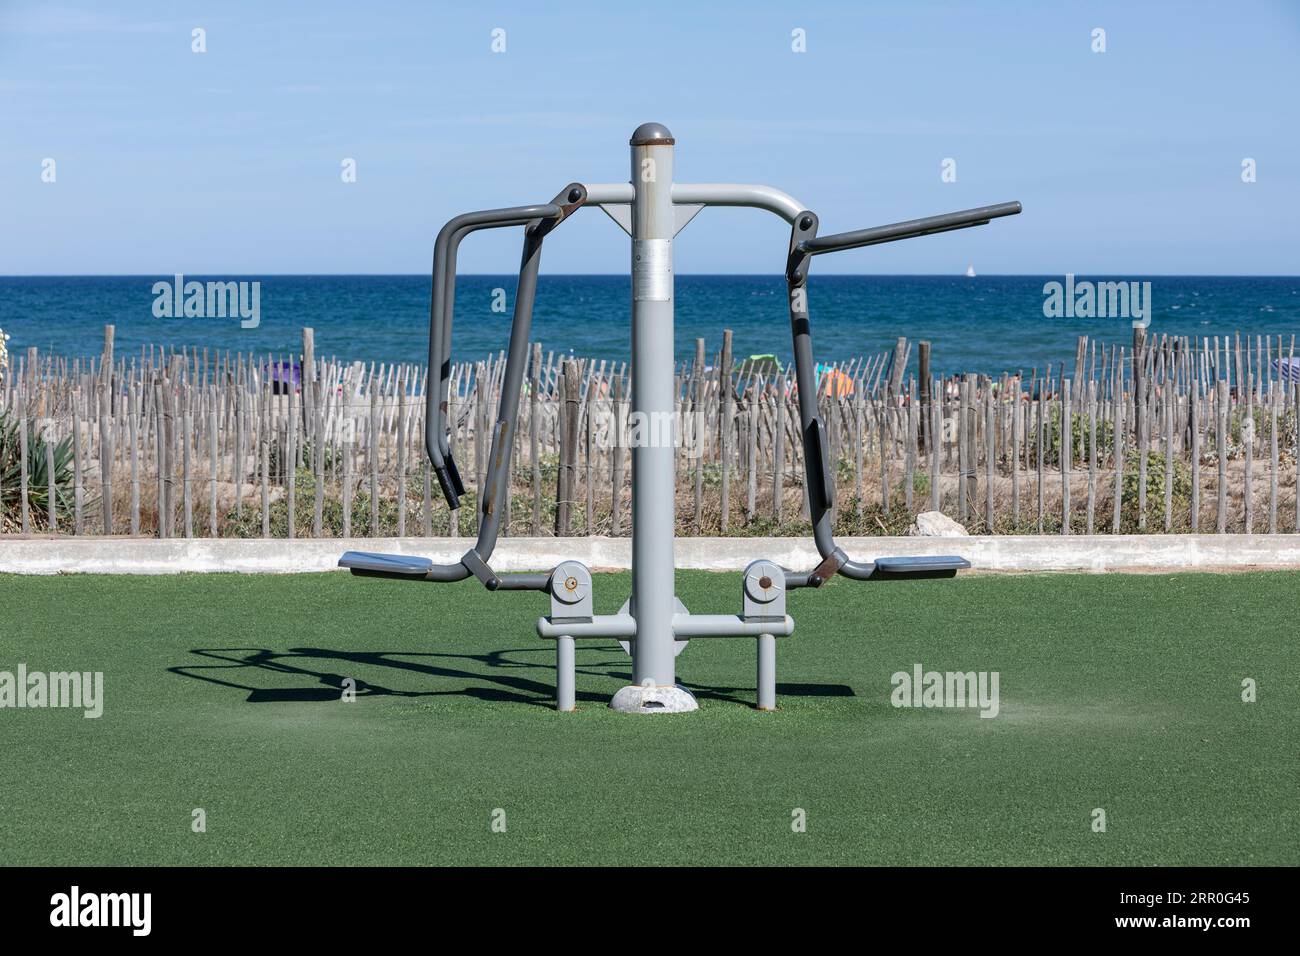 An exercise machine on artficial grass by a Mediterranean beach Stock Photo